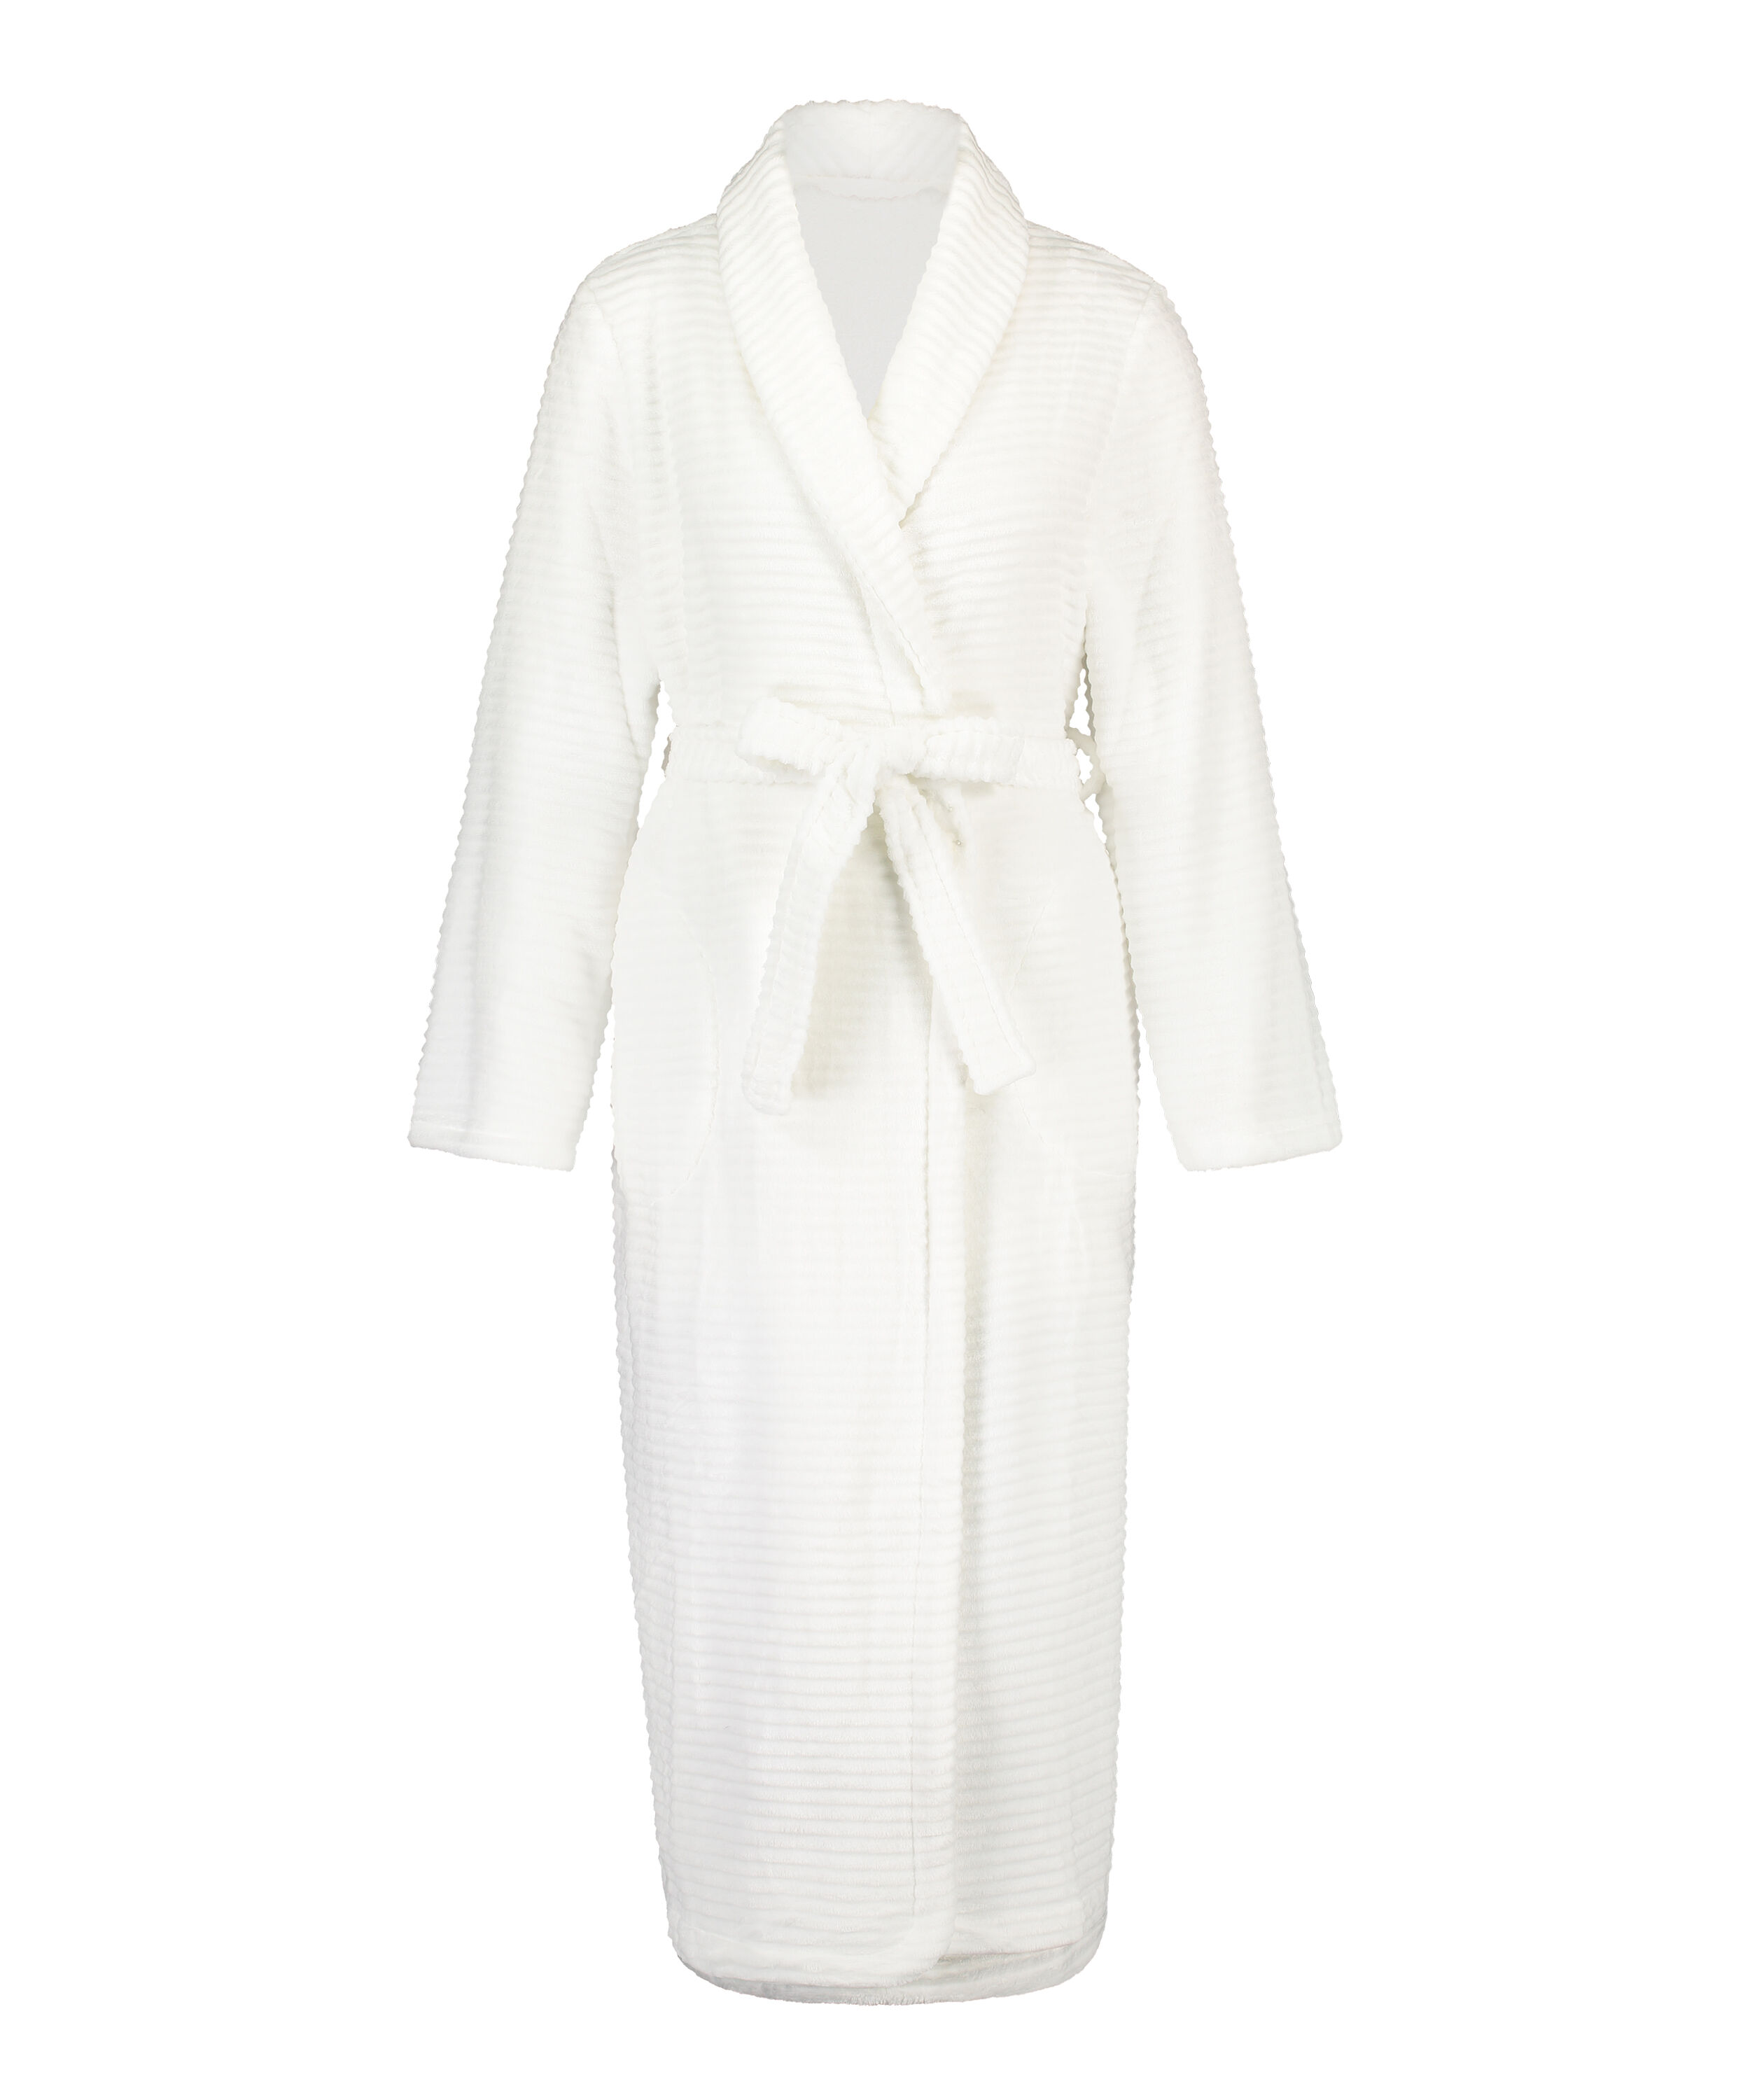 Company Cotton™ Terry Women's Long Robe | The Company Store